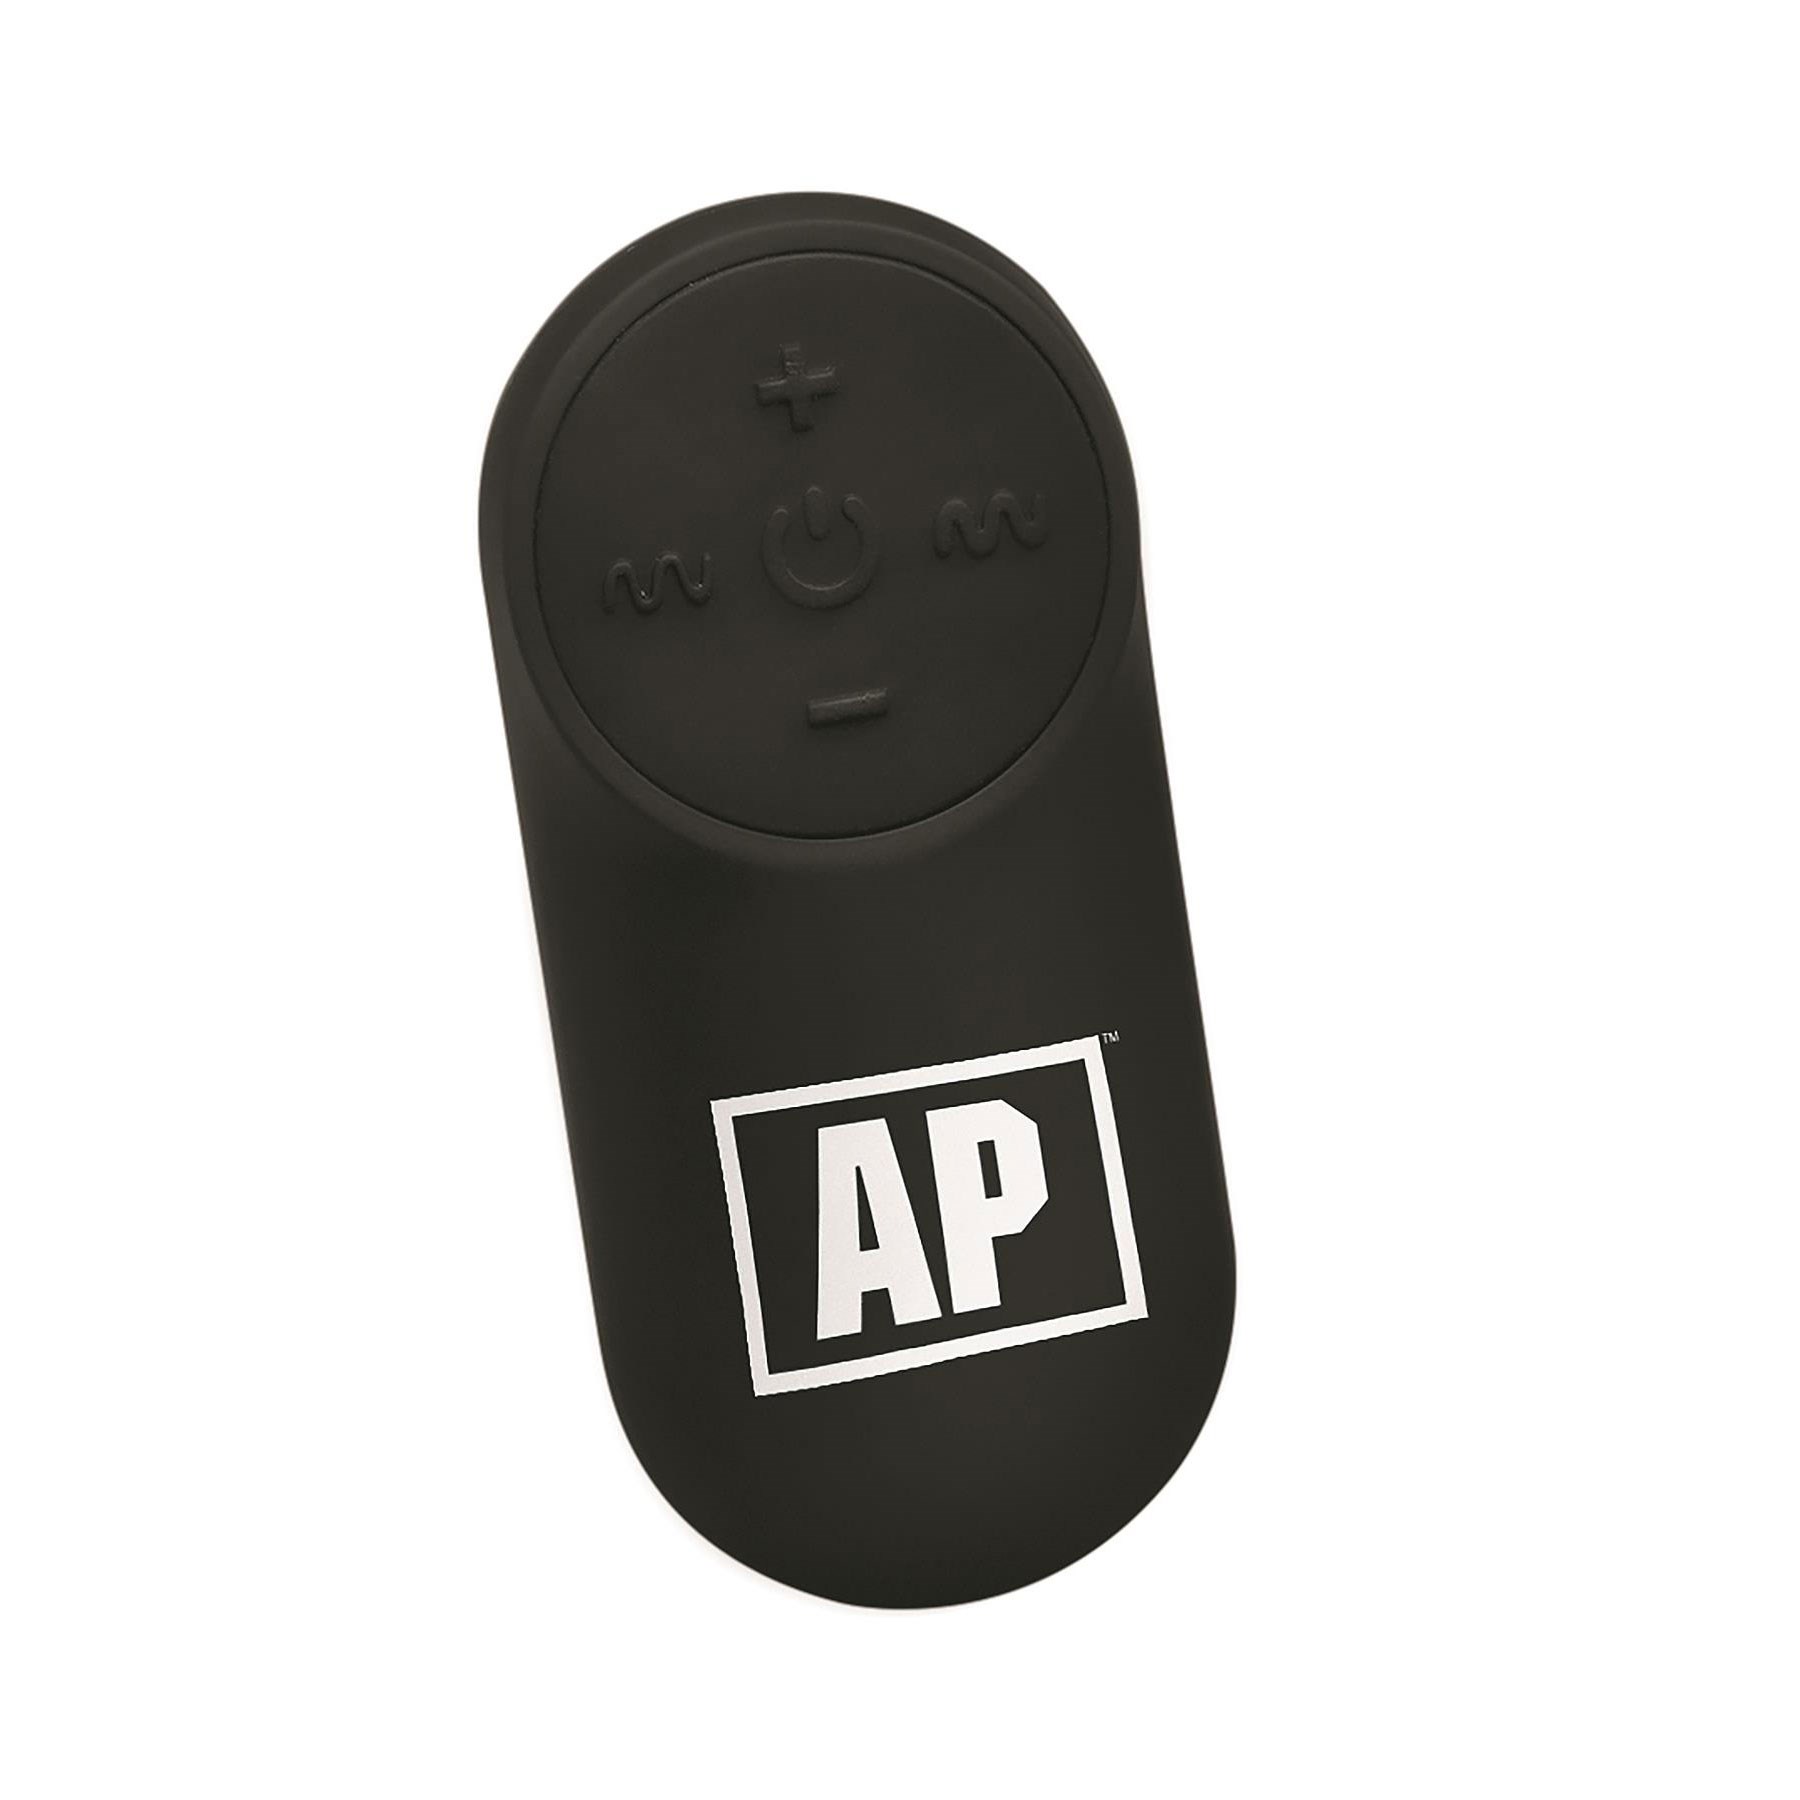 Alpha Pro 7Xp Milker Massager remote control